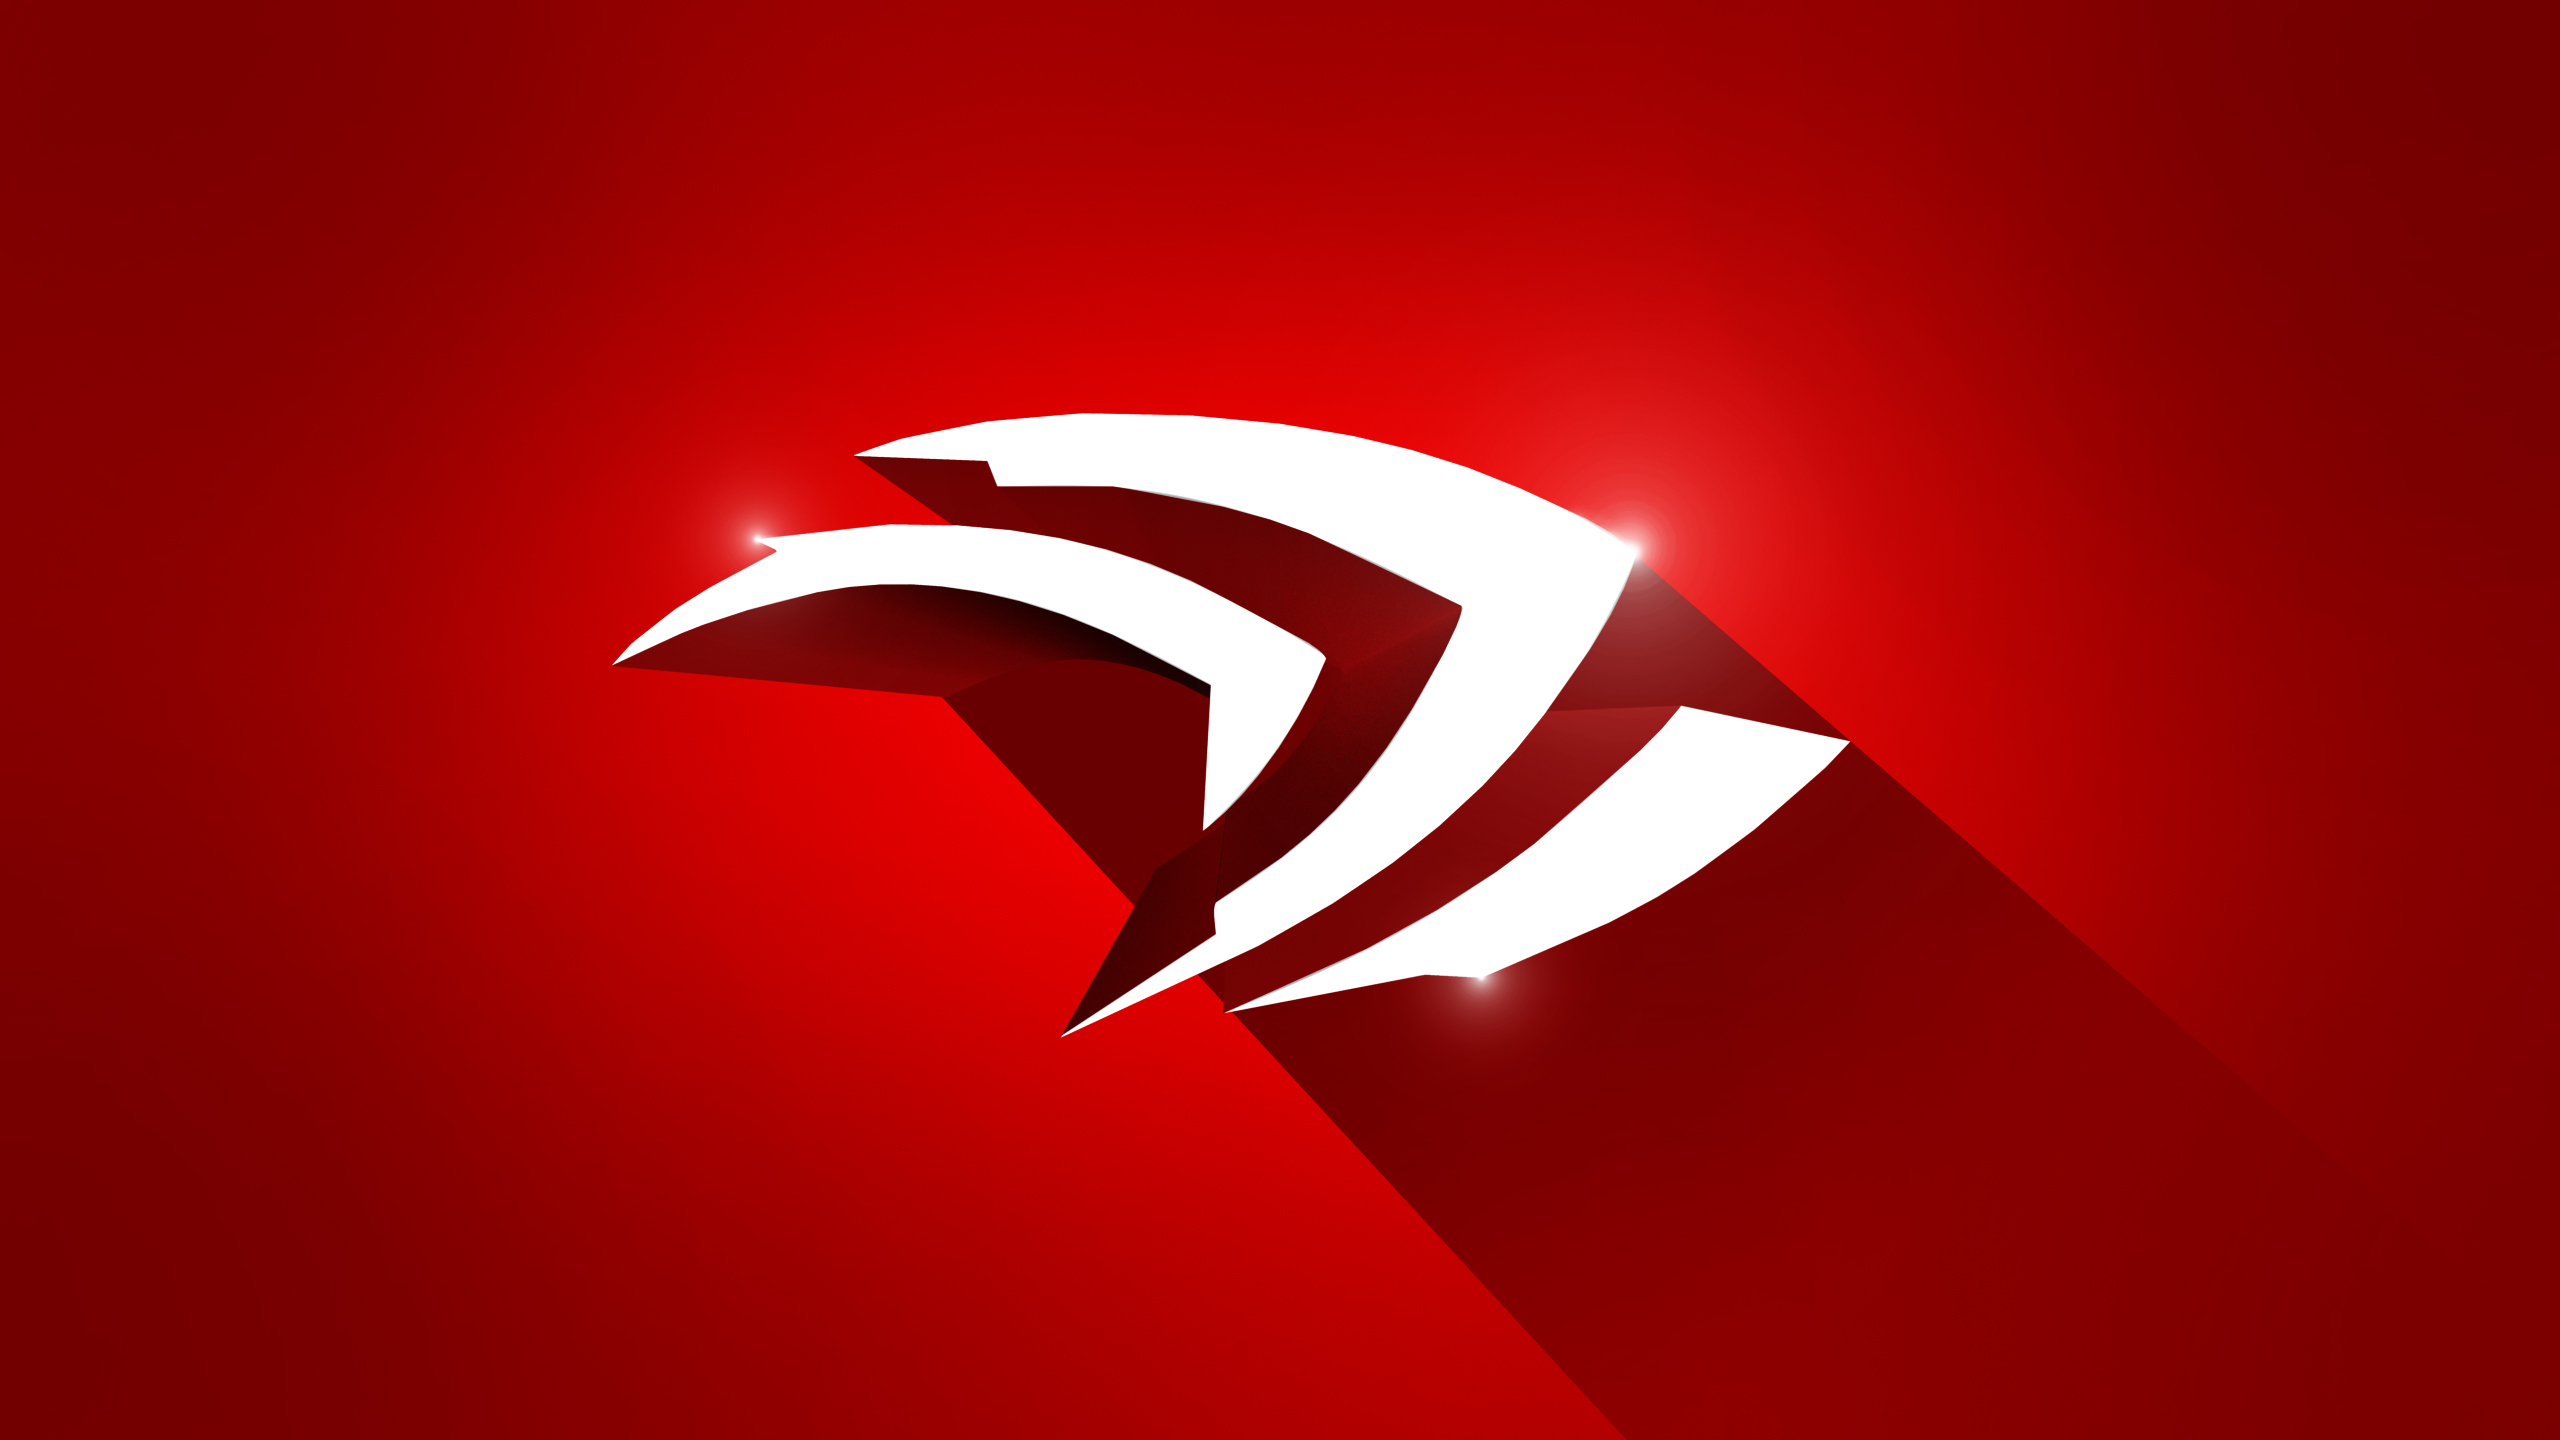 Download Wallpapers Nvidia Red Logo 4k Red Brickwall Nvidia Logo Images